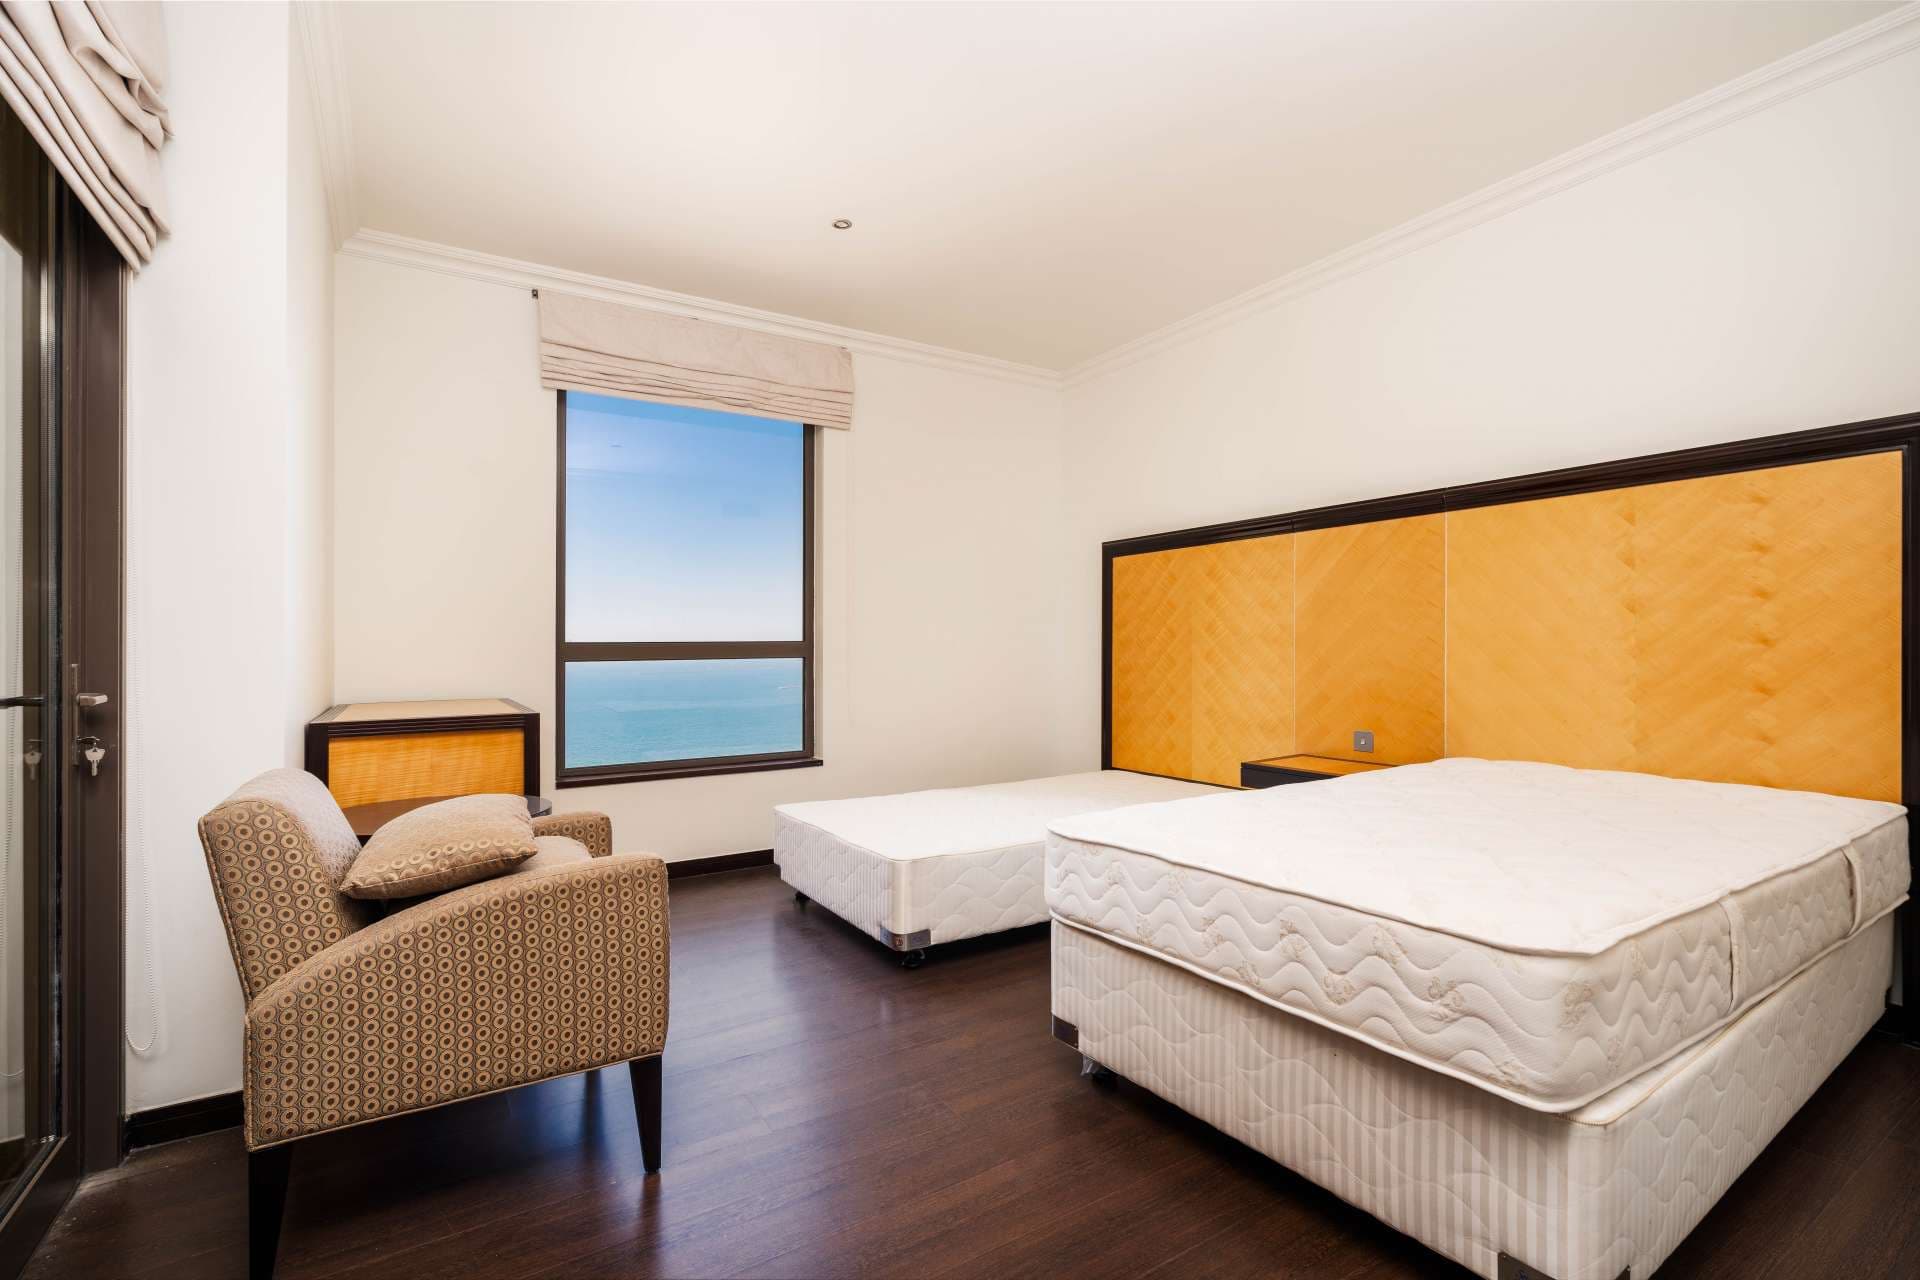 2 Bedroom Apartment For Rent Murjan Lp04926 7e9c47b98c205c0.jpg